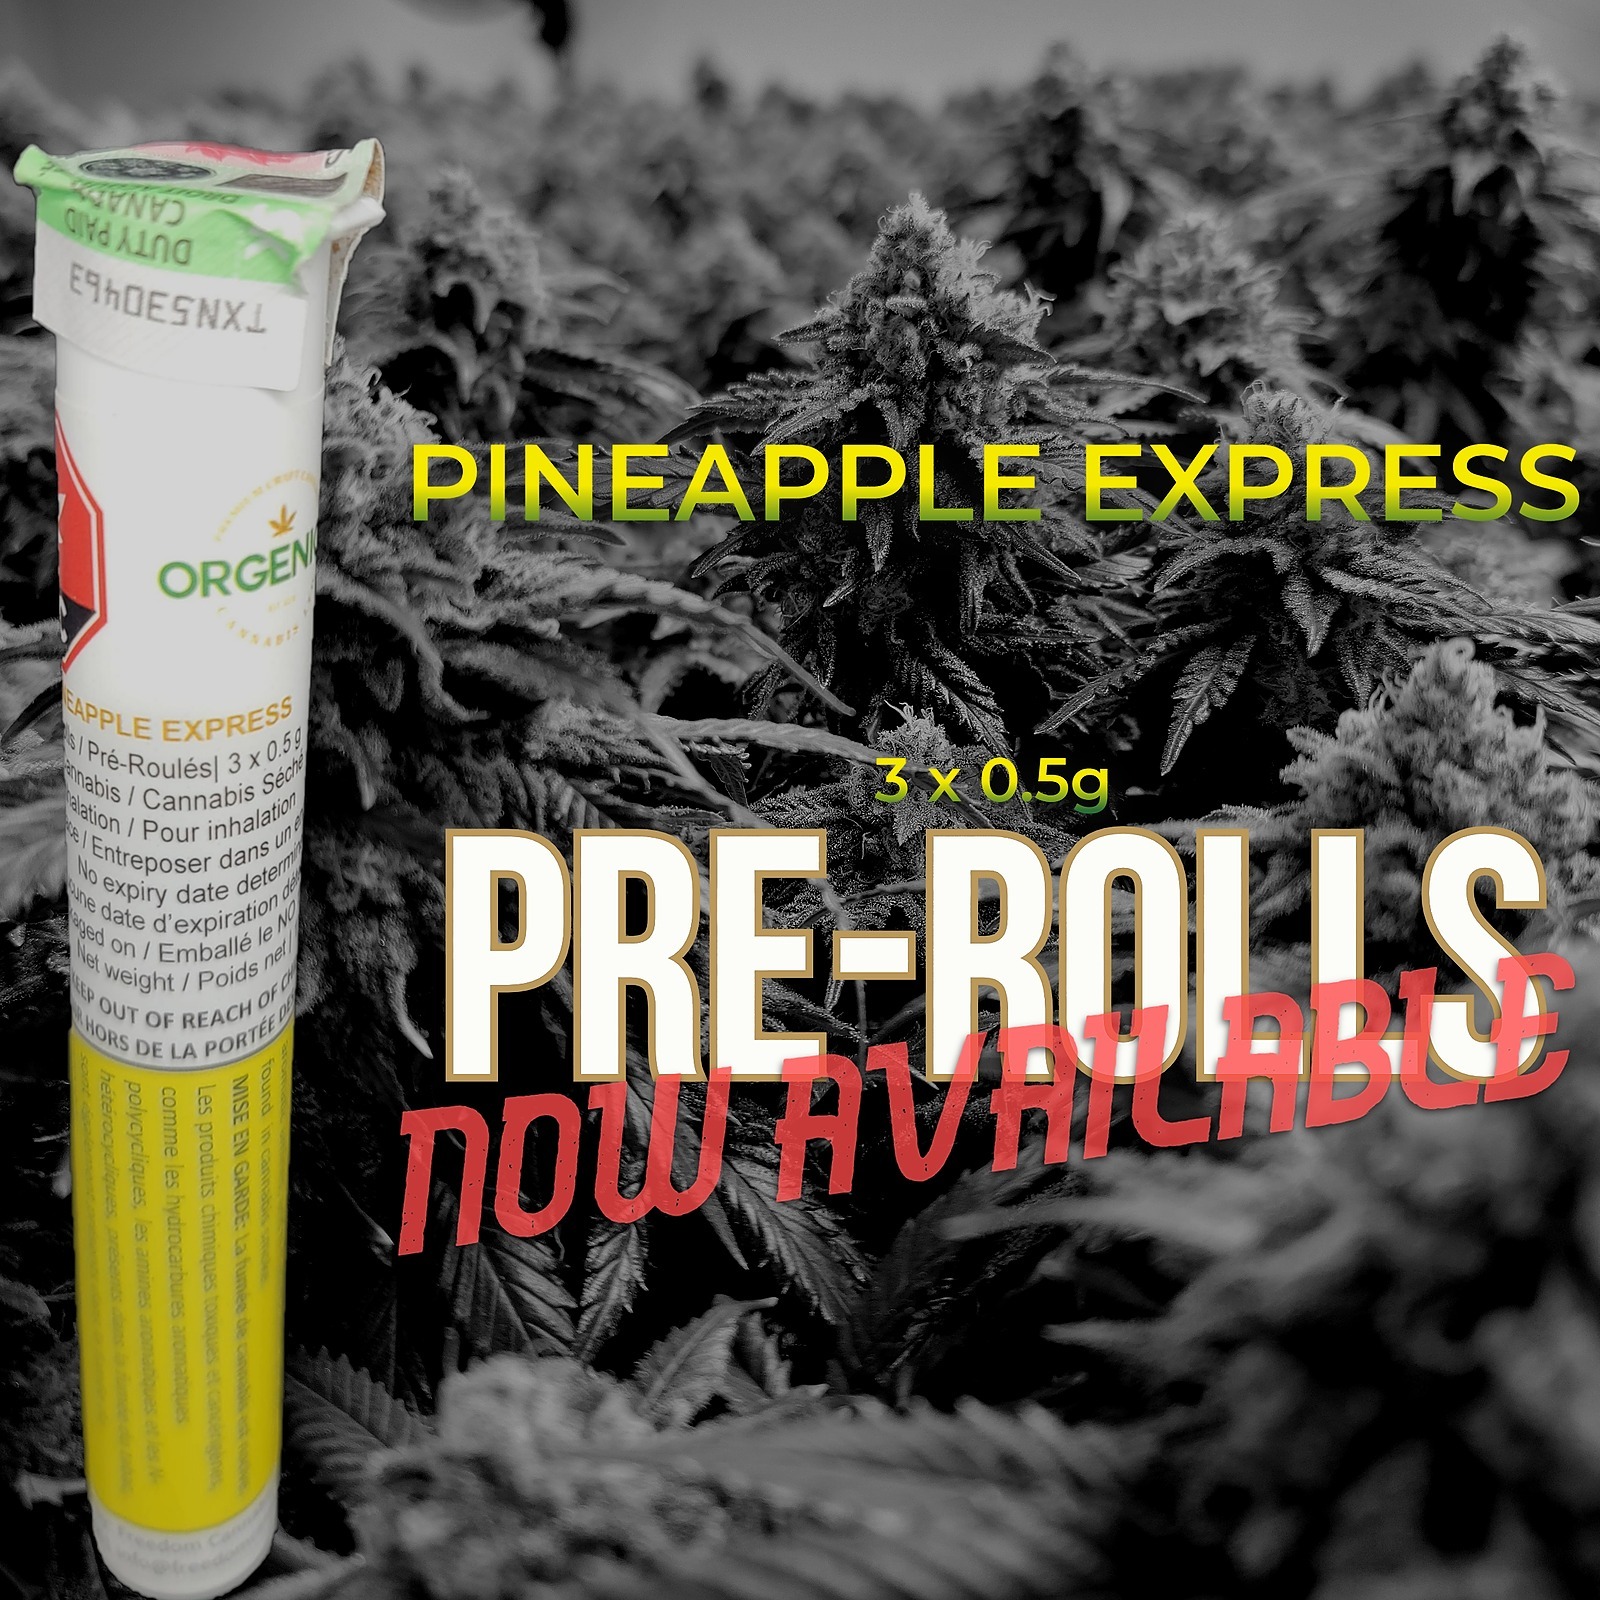 Pineapple Express Pre-Rolls